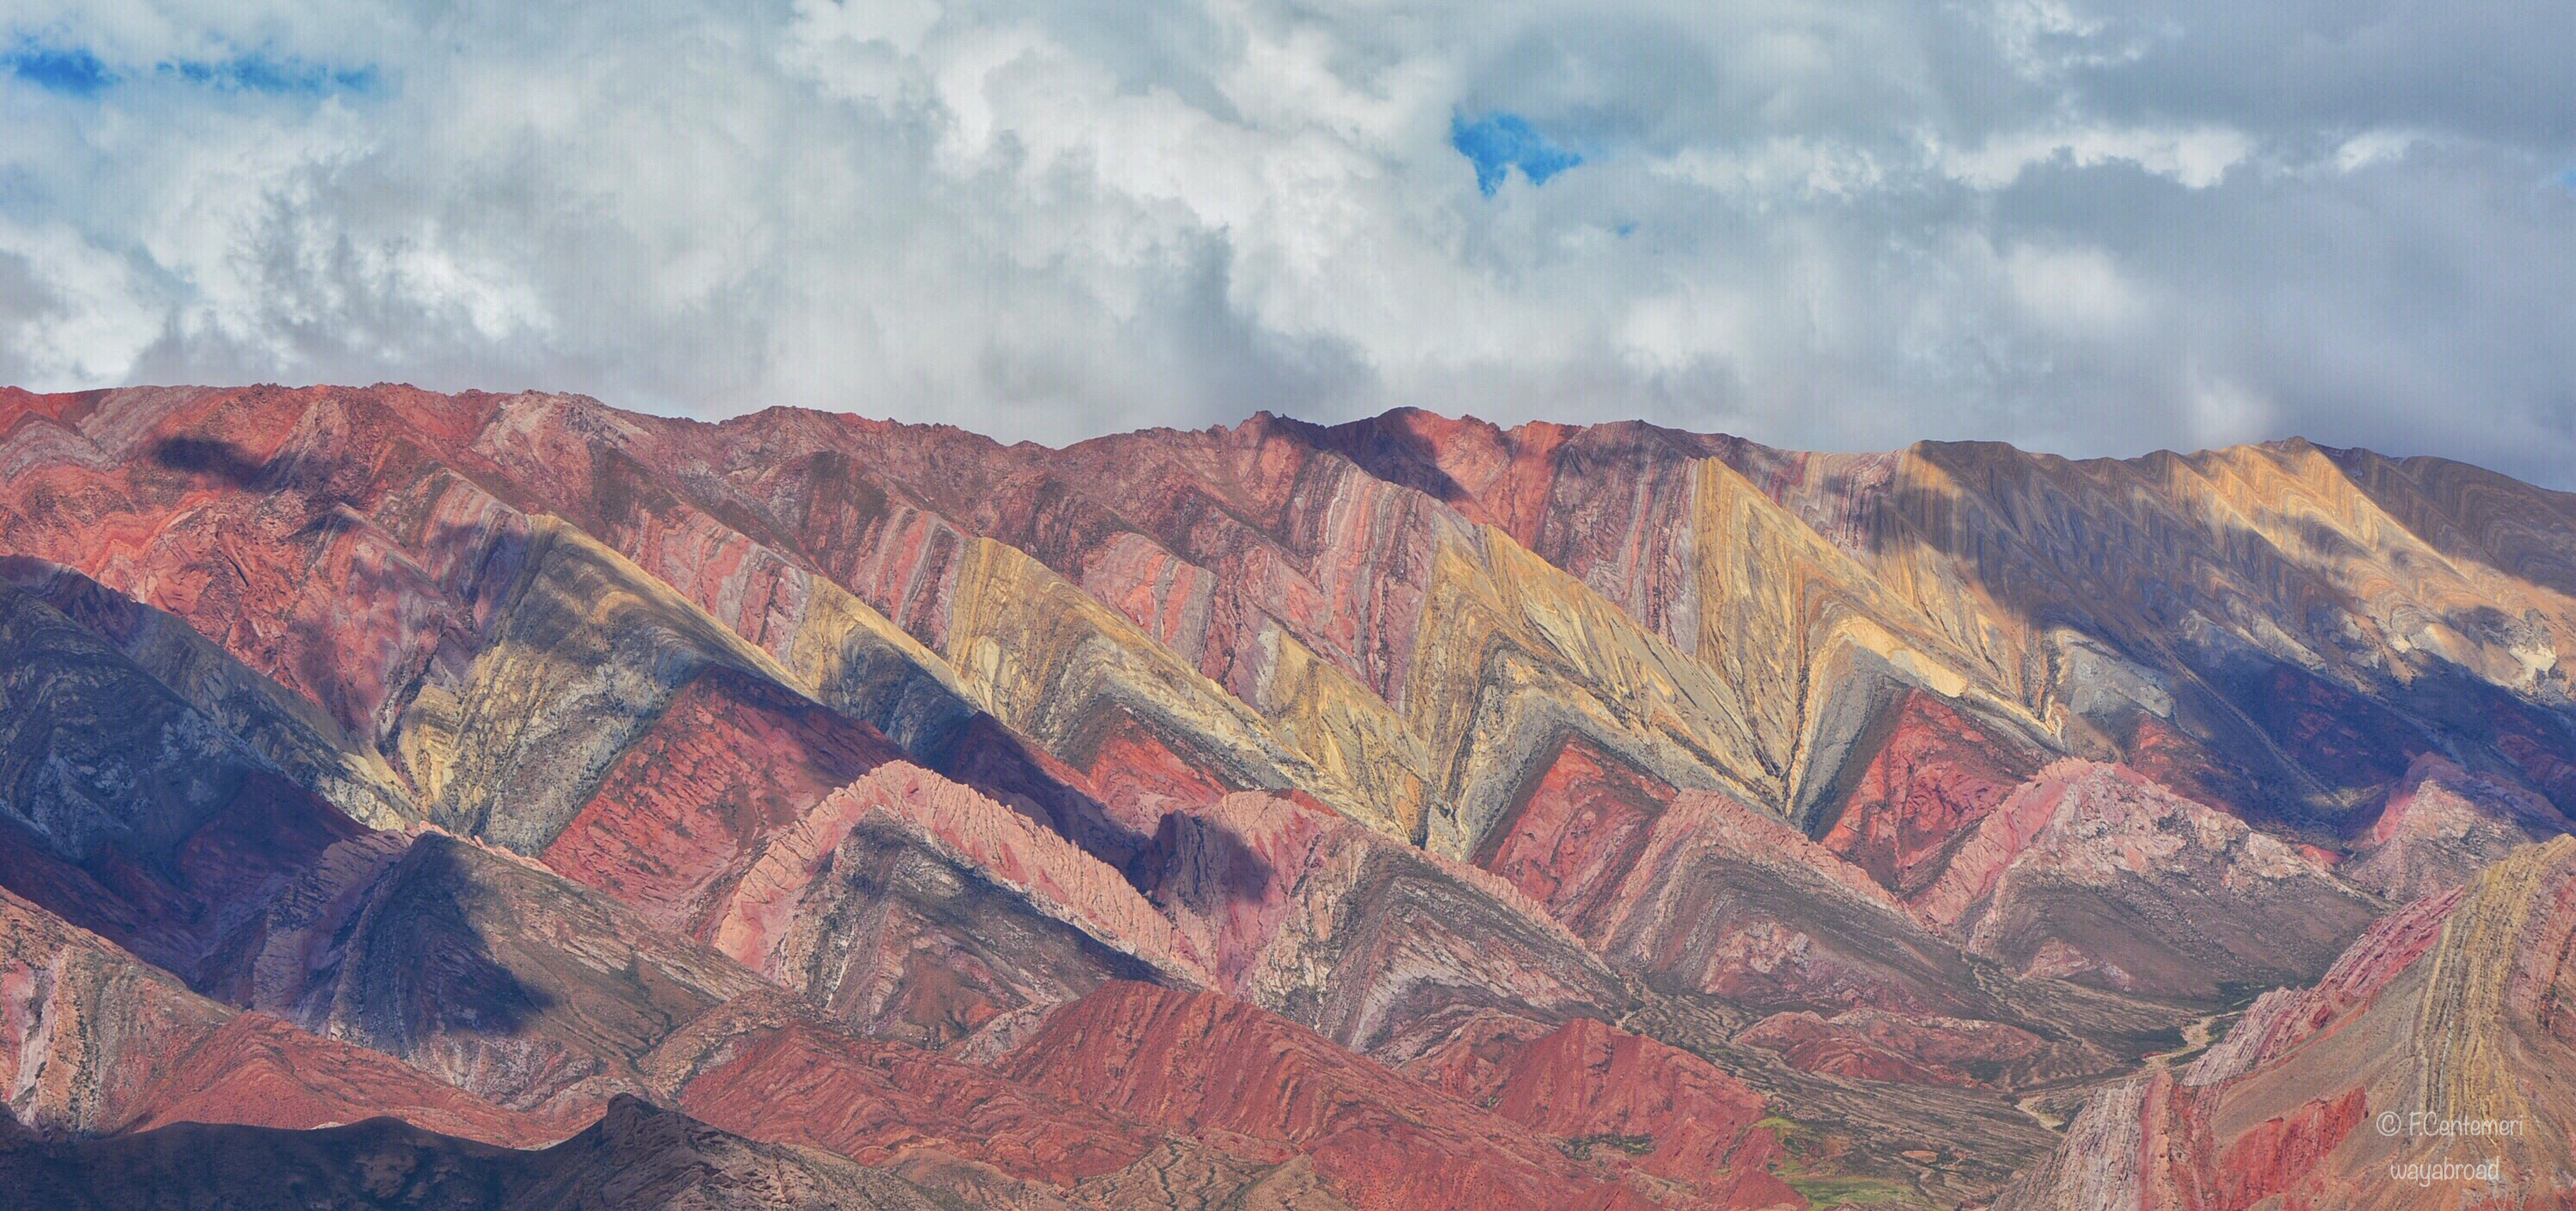 Hornocal, la montagna dei 14 colori e la Quebrada de Humahuaca